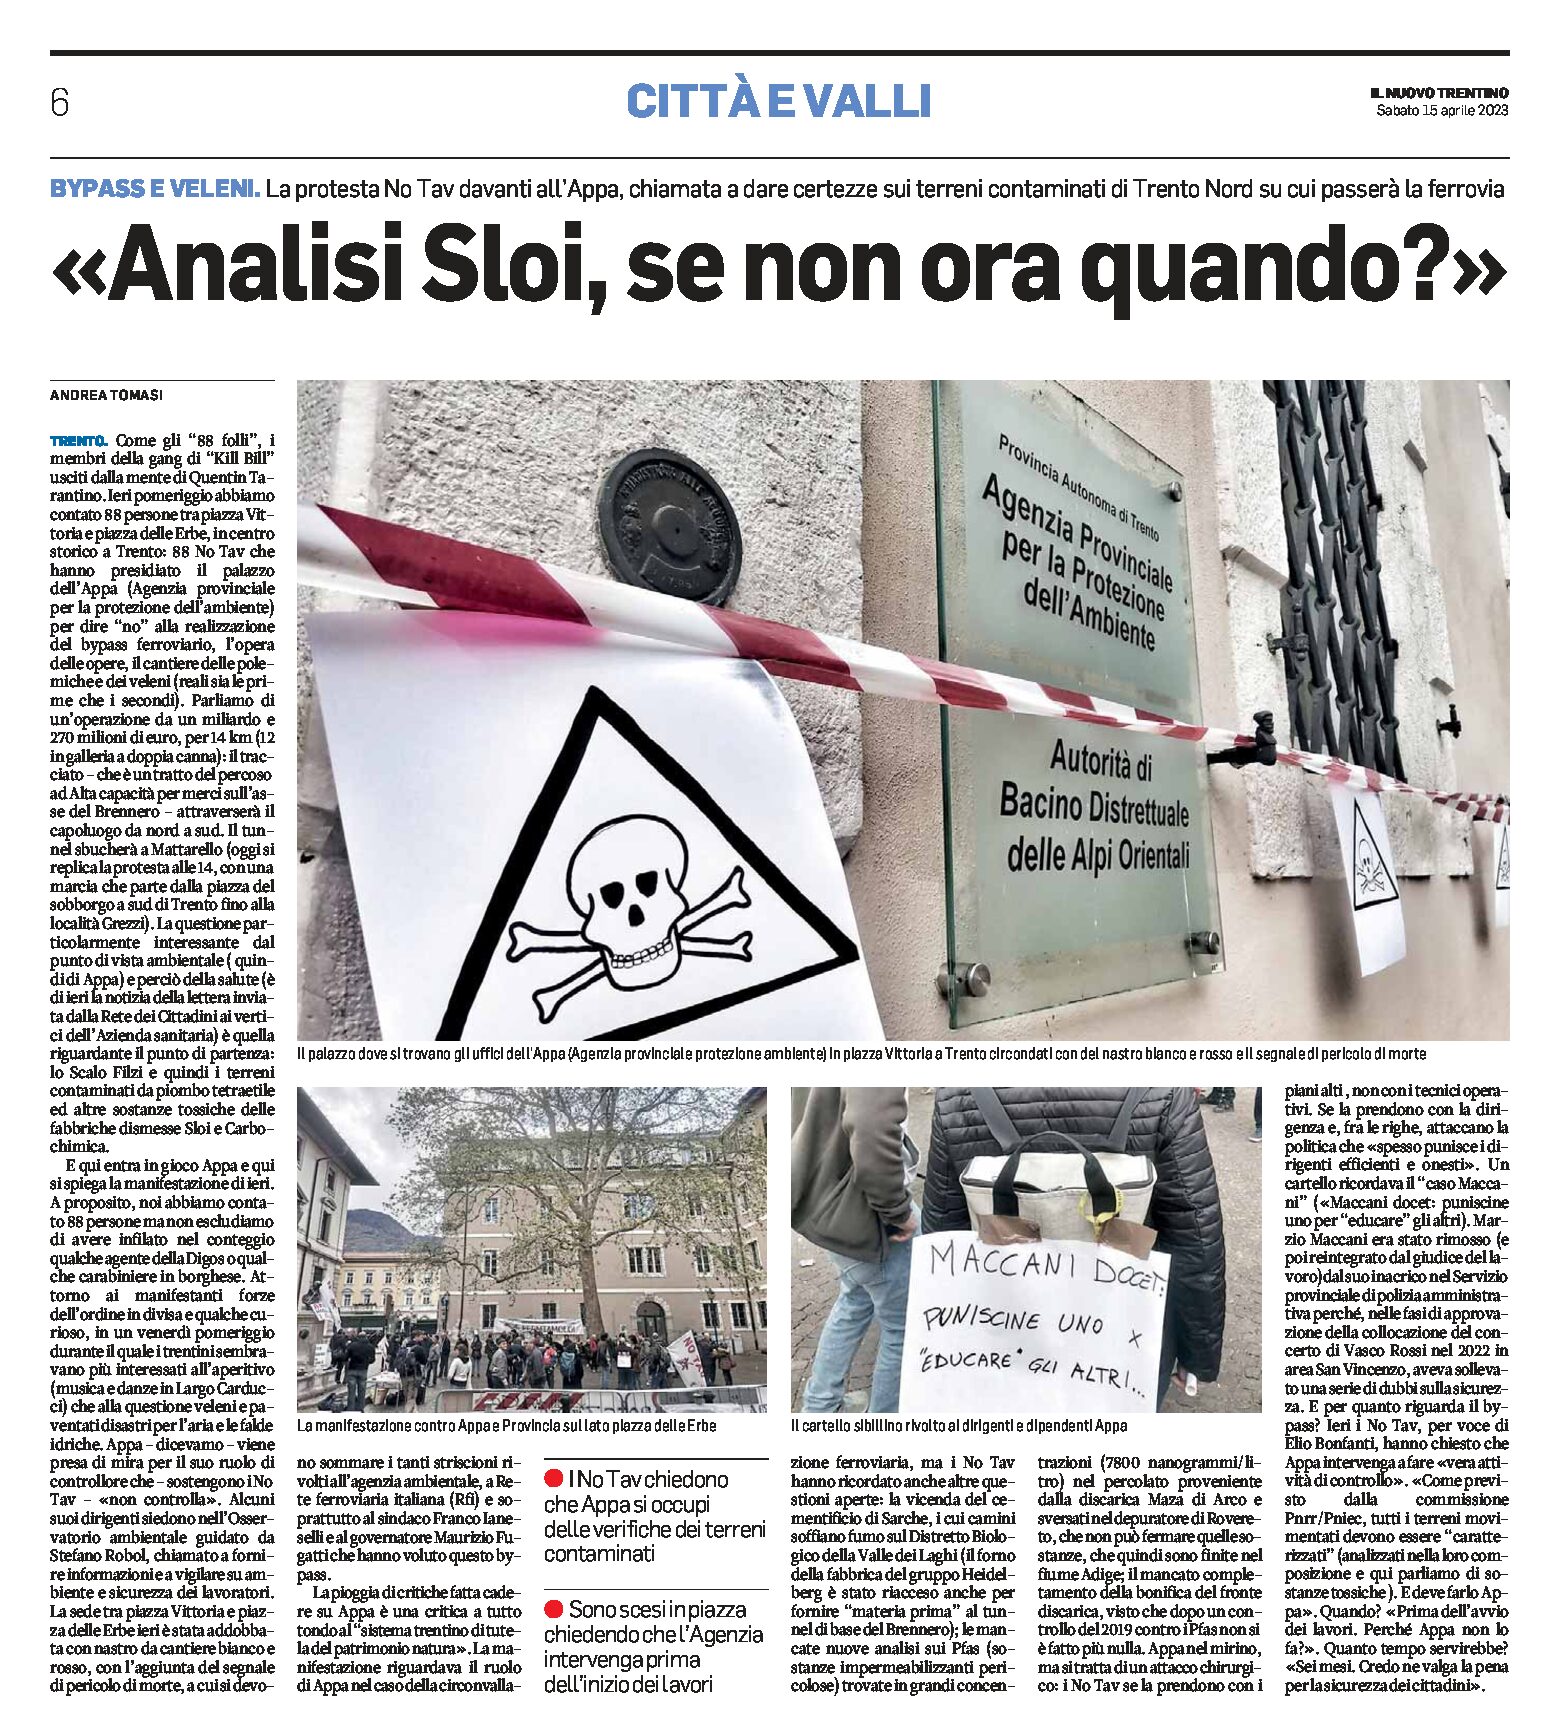 Trento, bypass e veleni: “analisi Sloi, se non ora quando?” Protesta No Tav davanti all’Appa